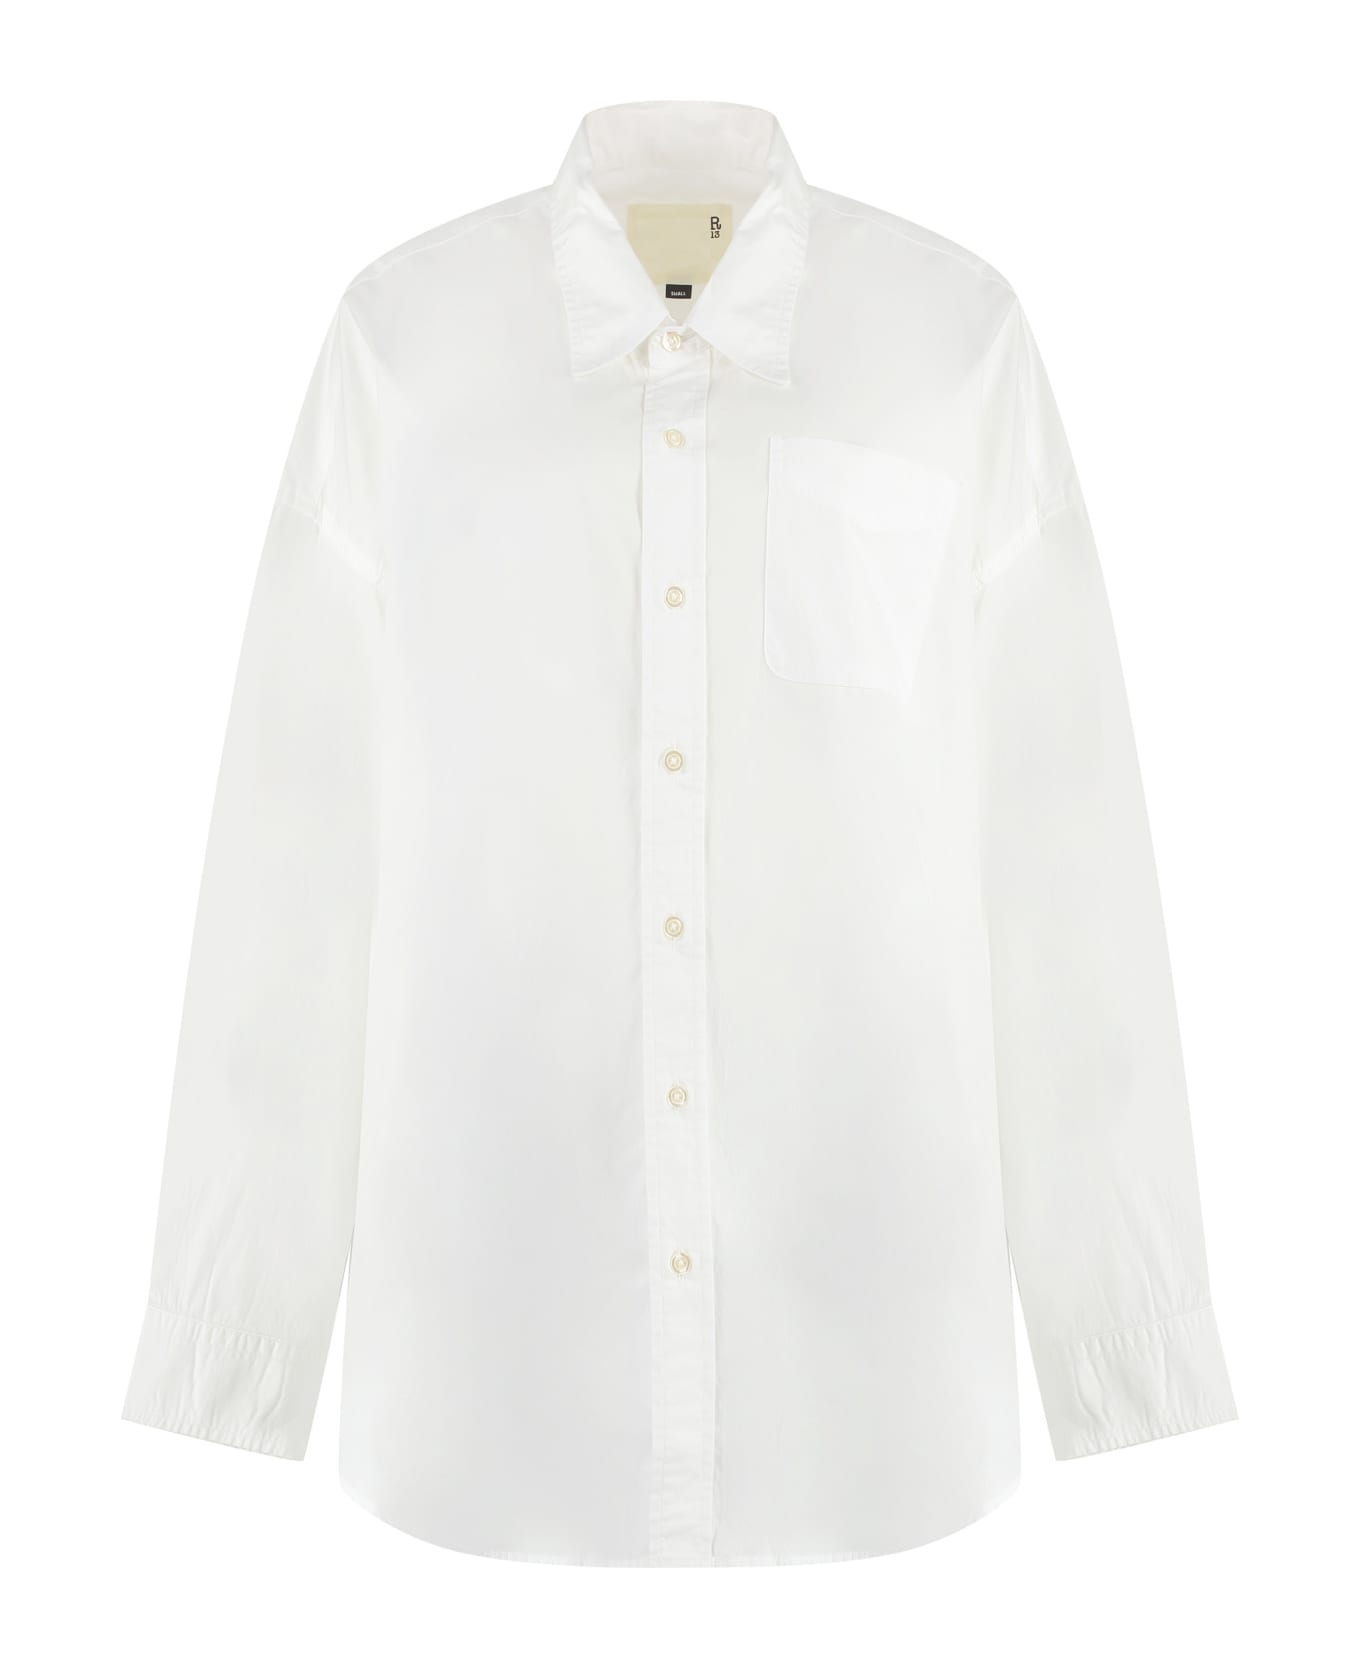 R13 Oversize Shirt - White